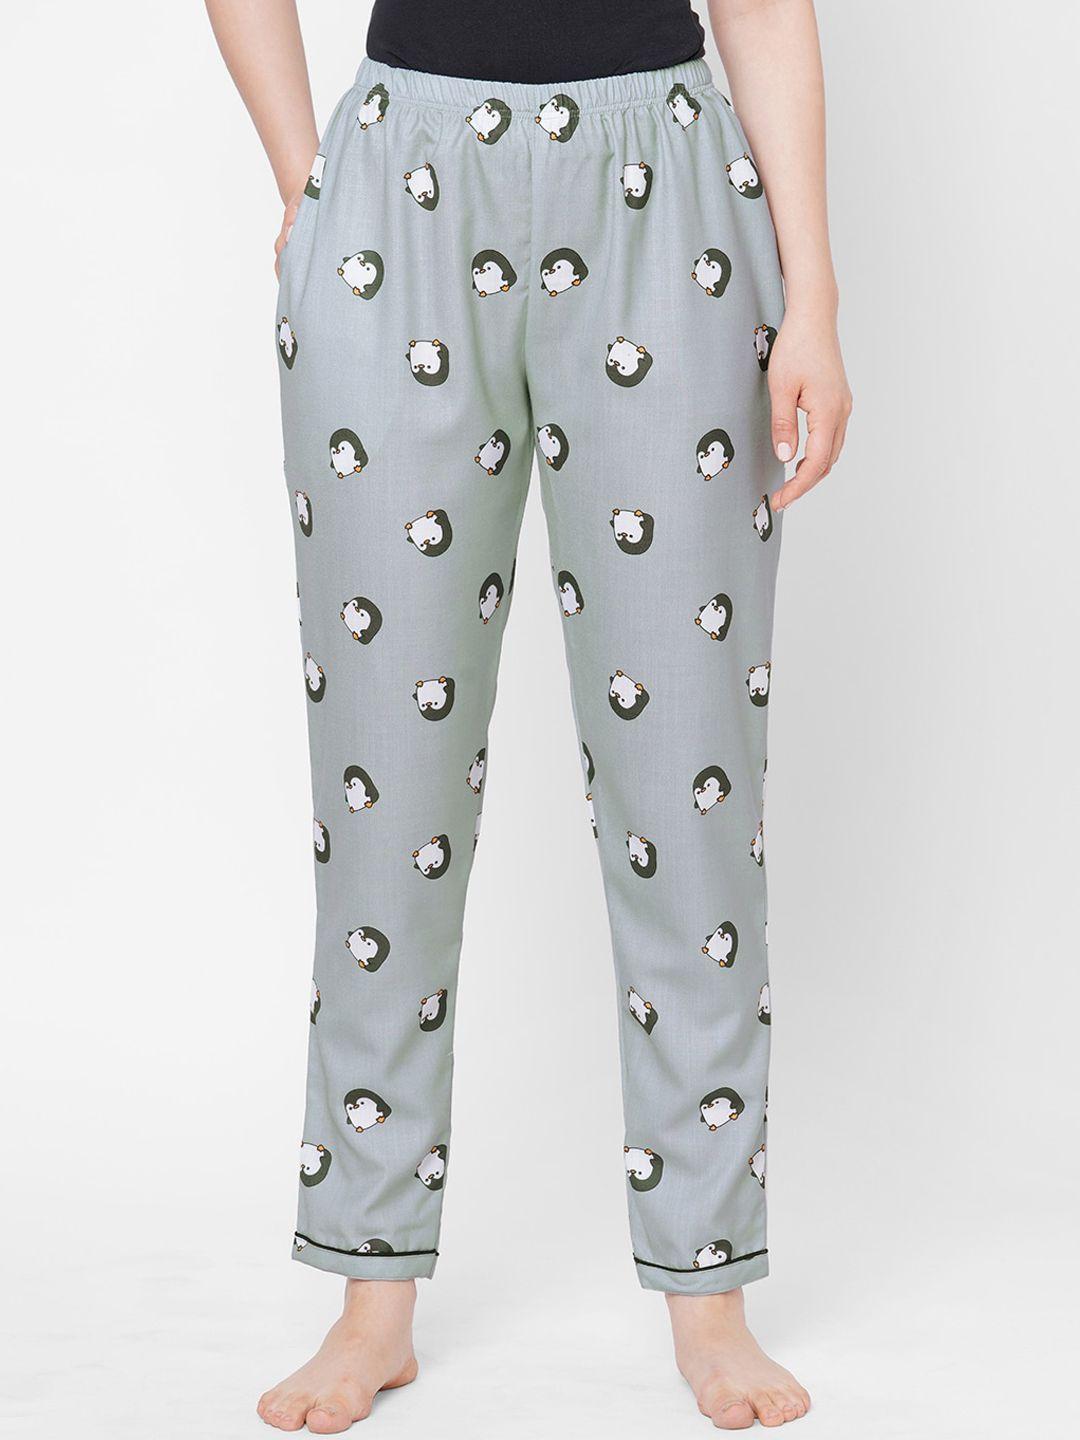 fashionrack women grey & white animal printed mid-rise lounge pants